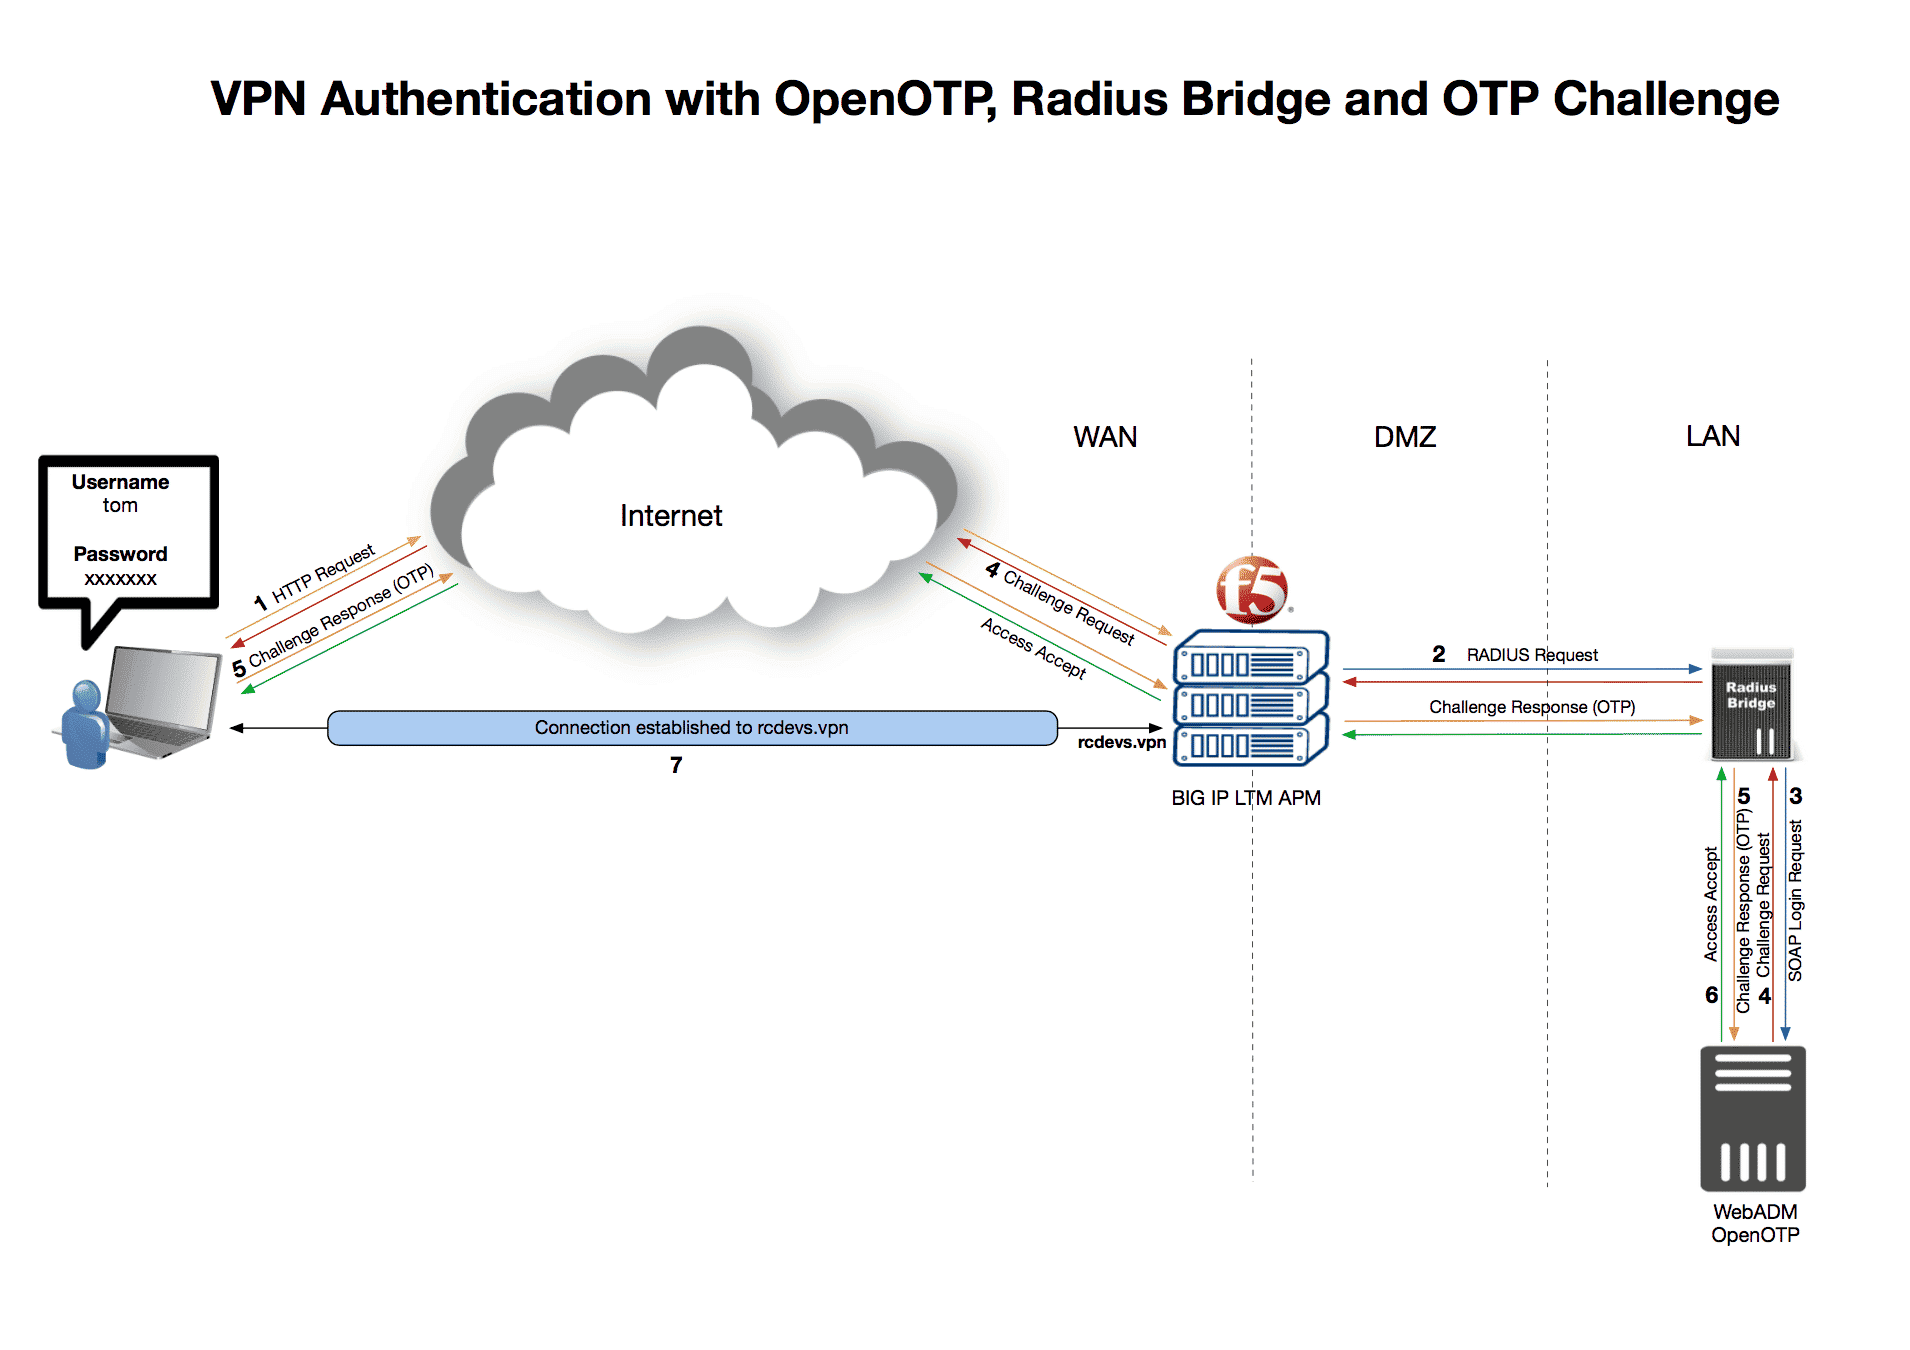 Authentification VPN avec OpenOTP, Radius Bridge et OTP Challenge